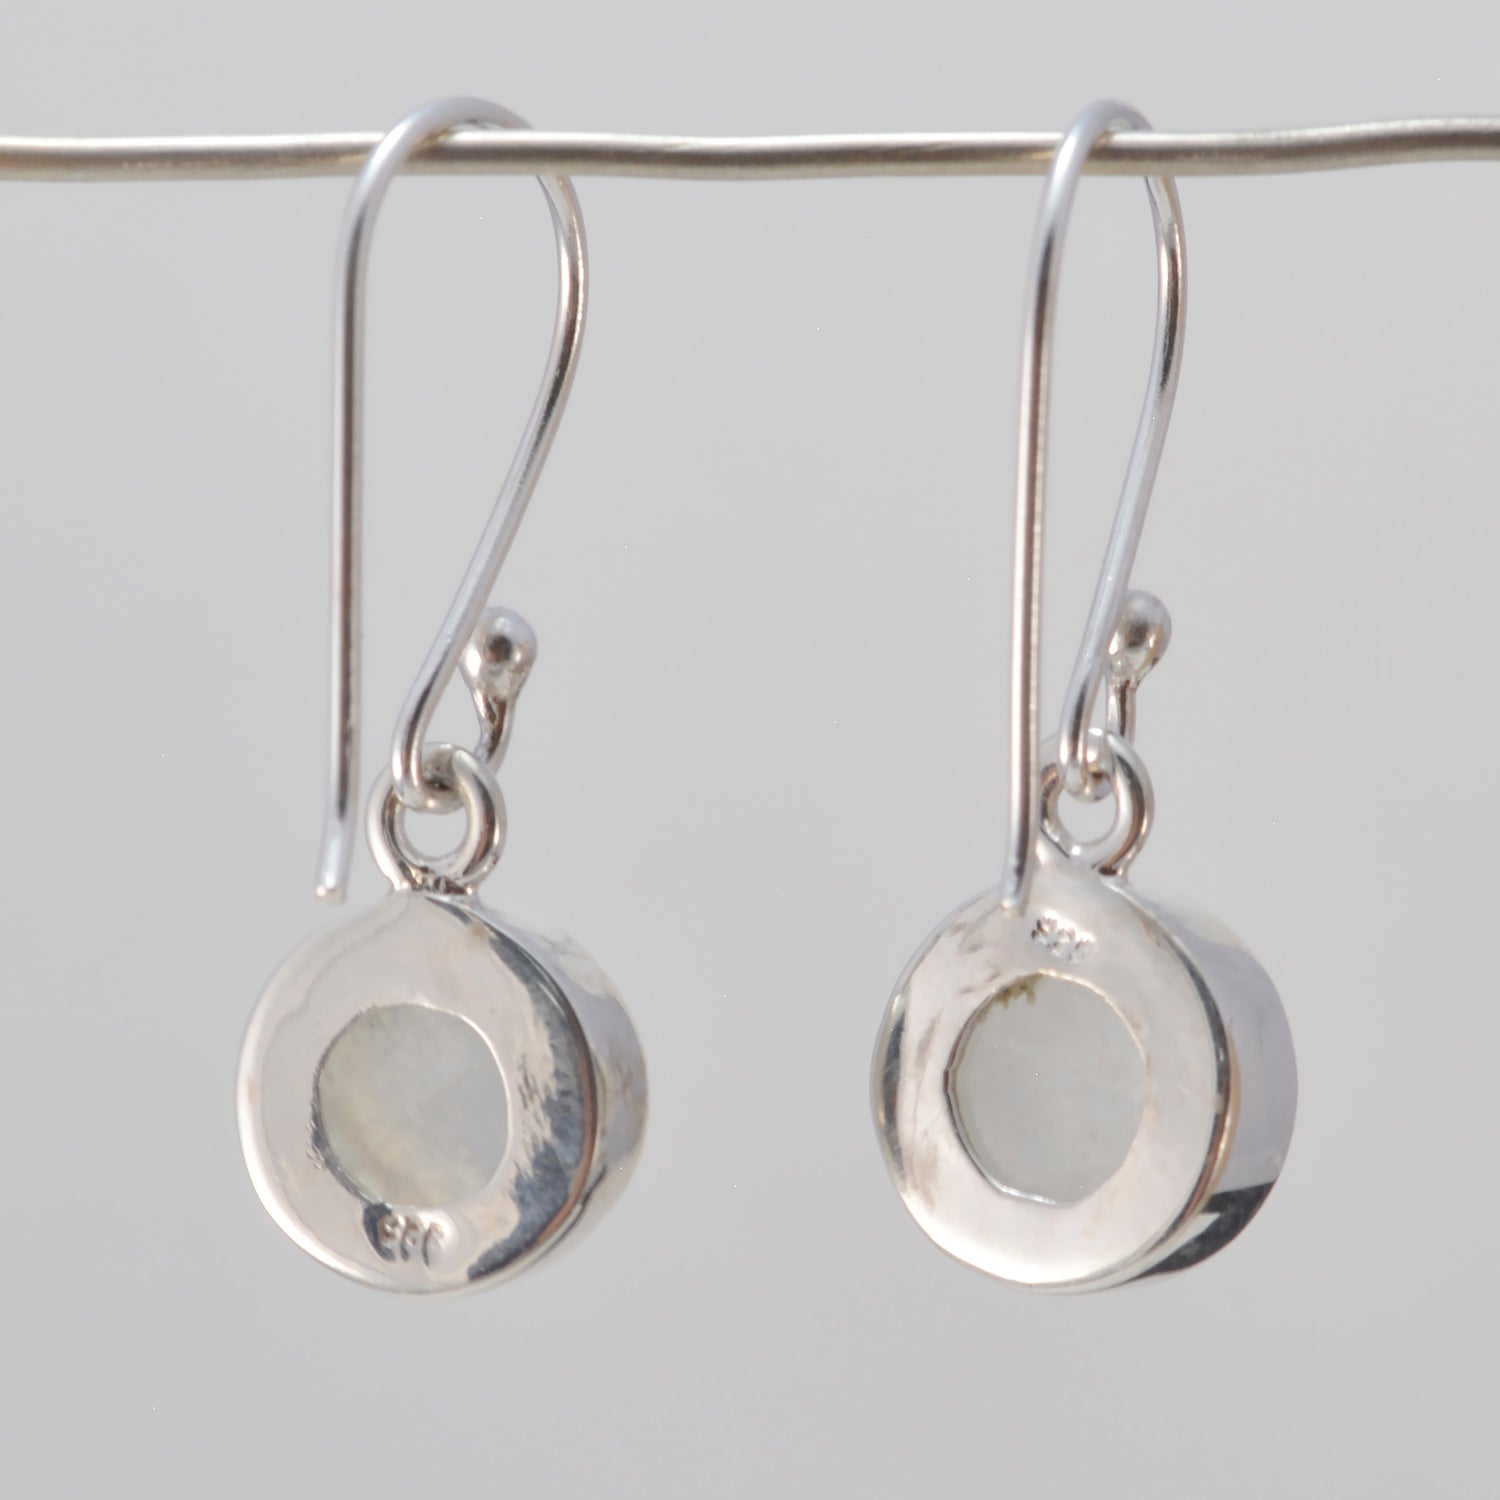 Riyo Genuine Gems round Cabochon White Rainbow Moonstone Silver Earrings gift for wife